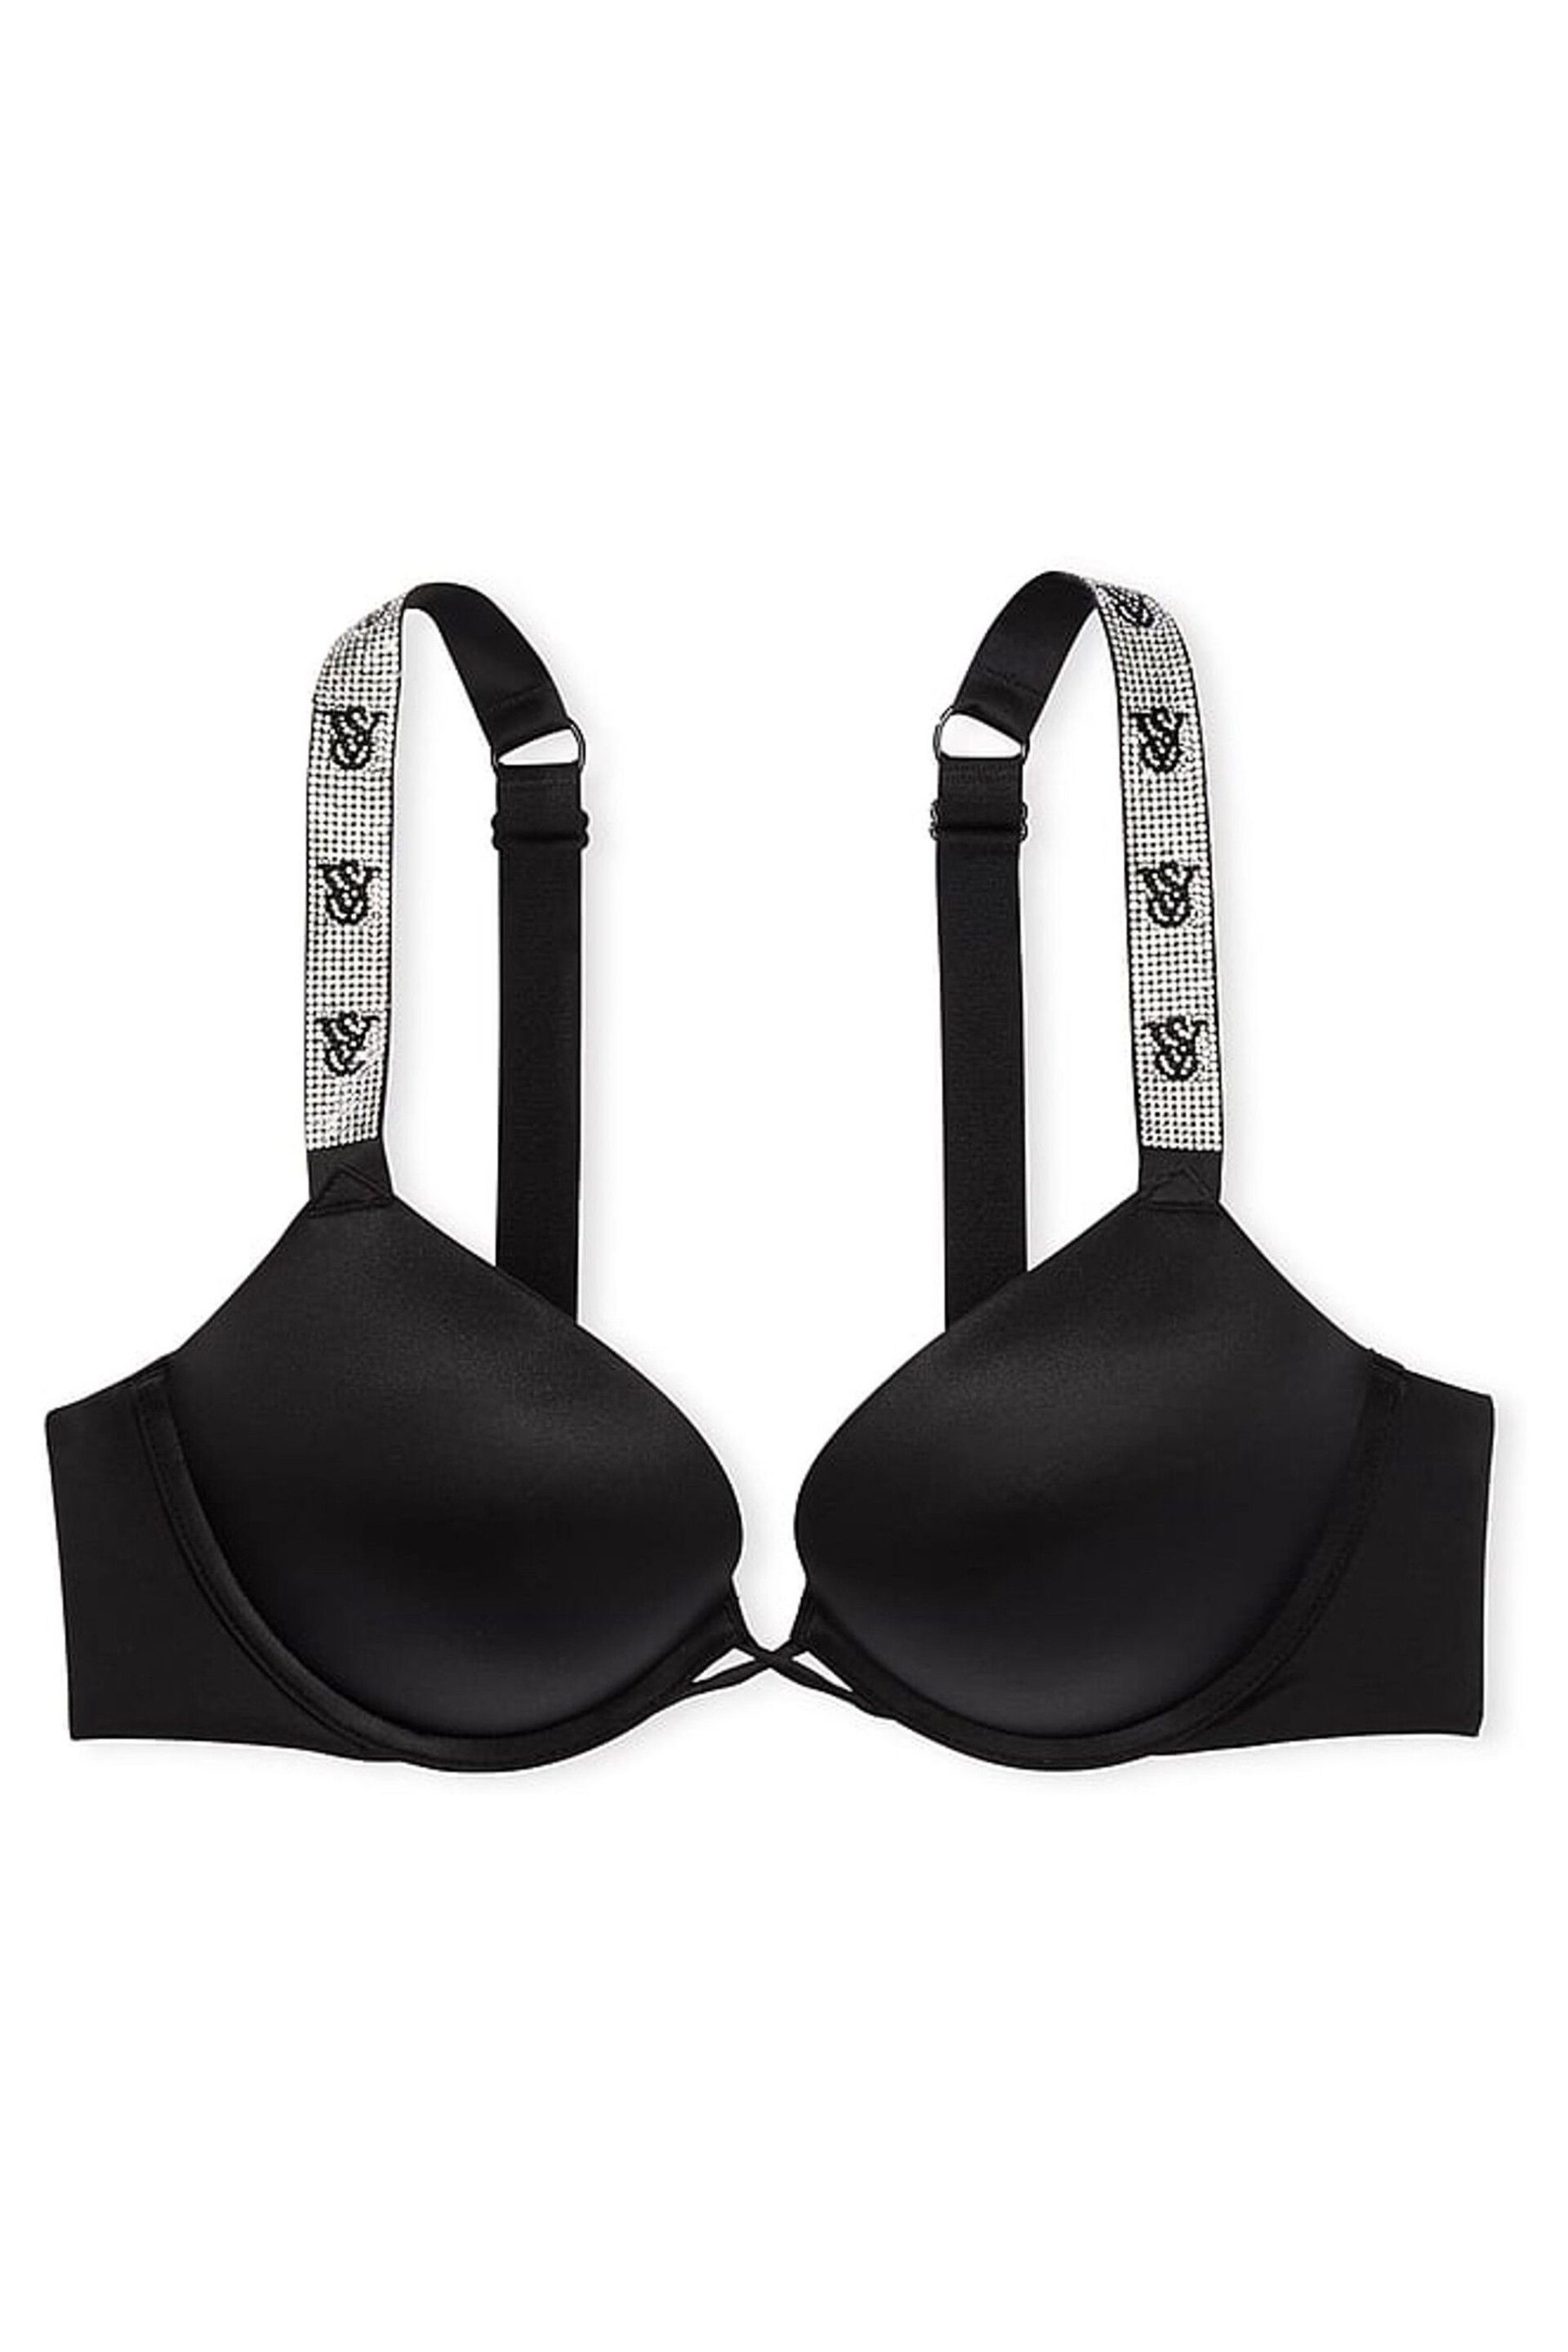 Victoria's Secret Black Smooth Monogram Shine Strap Add 2 Cups Push Up Bombshell Bra - Image 3 of 3